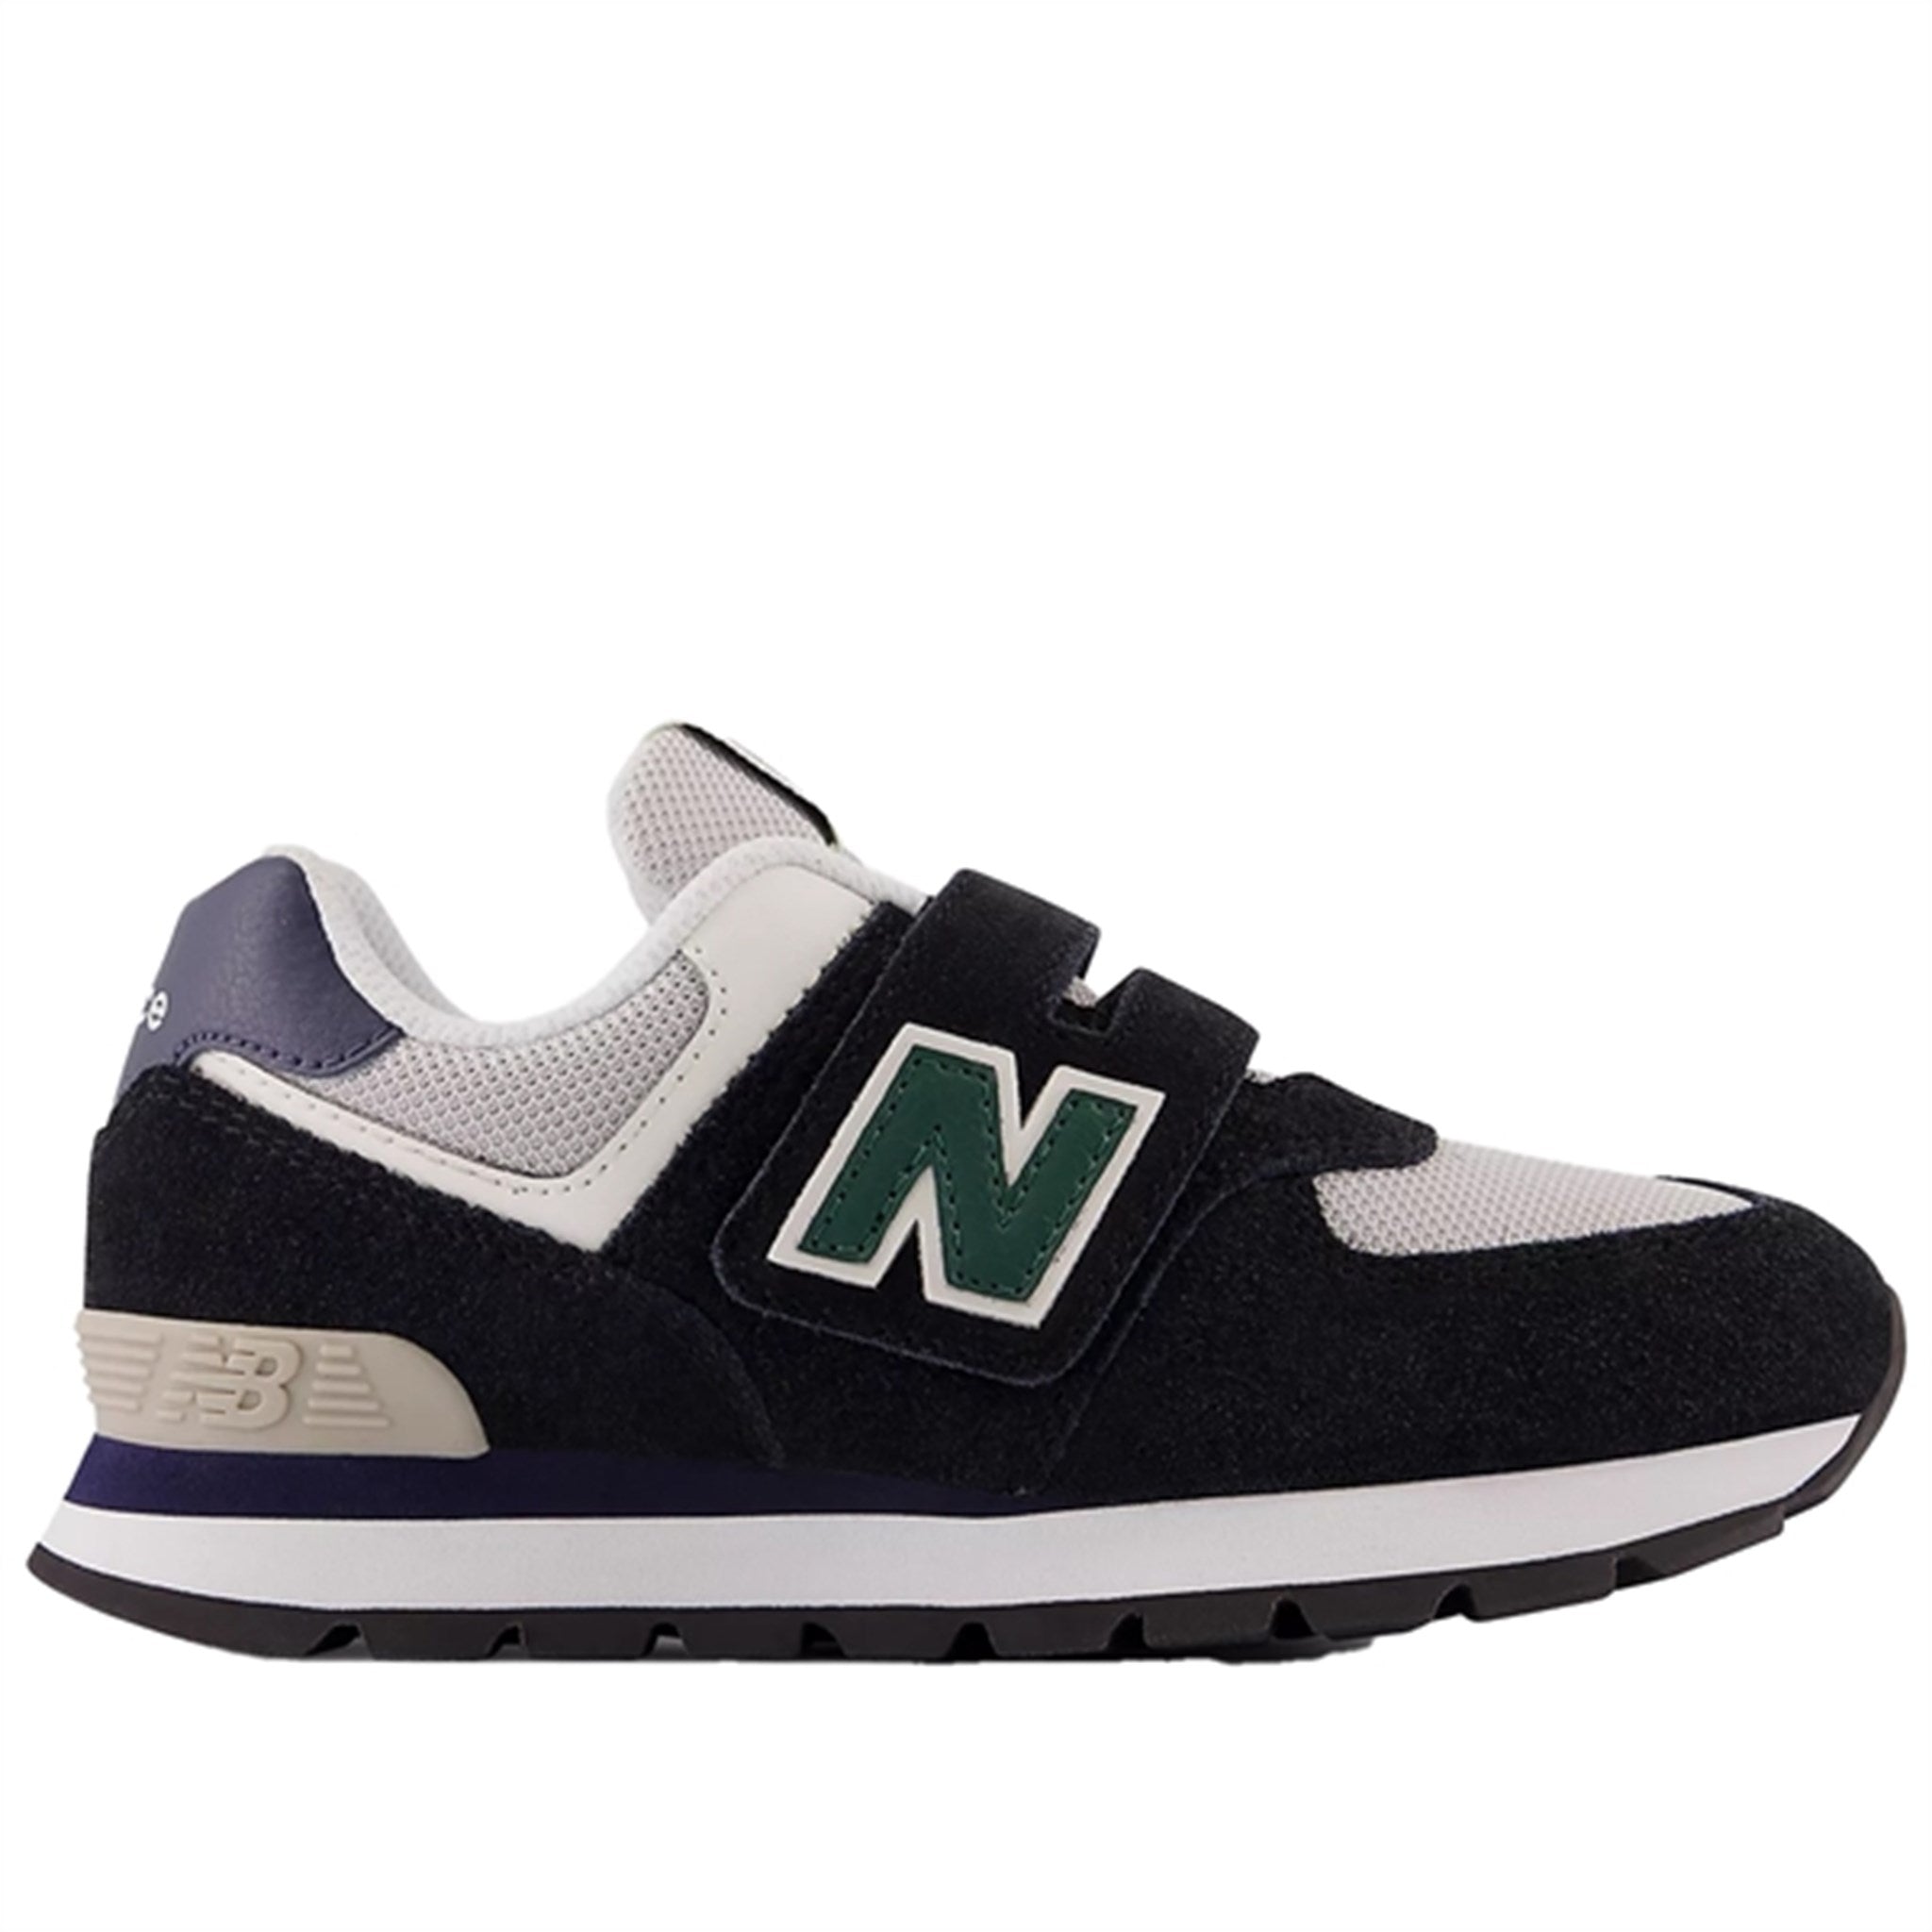 New Balance 574 Black/Navy/Nightwatch Green Sneakers